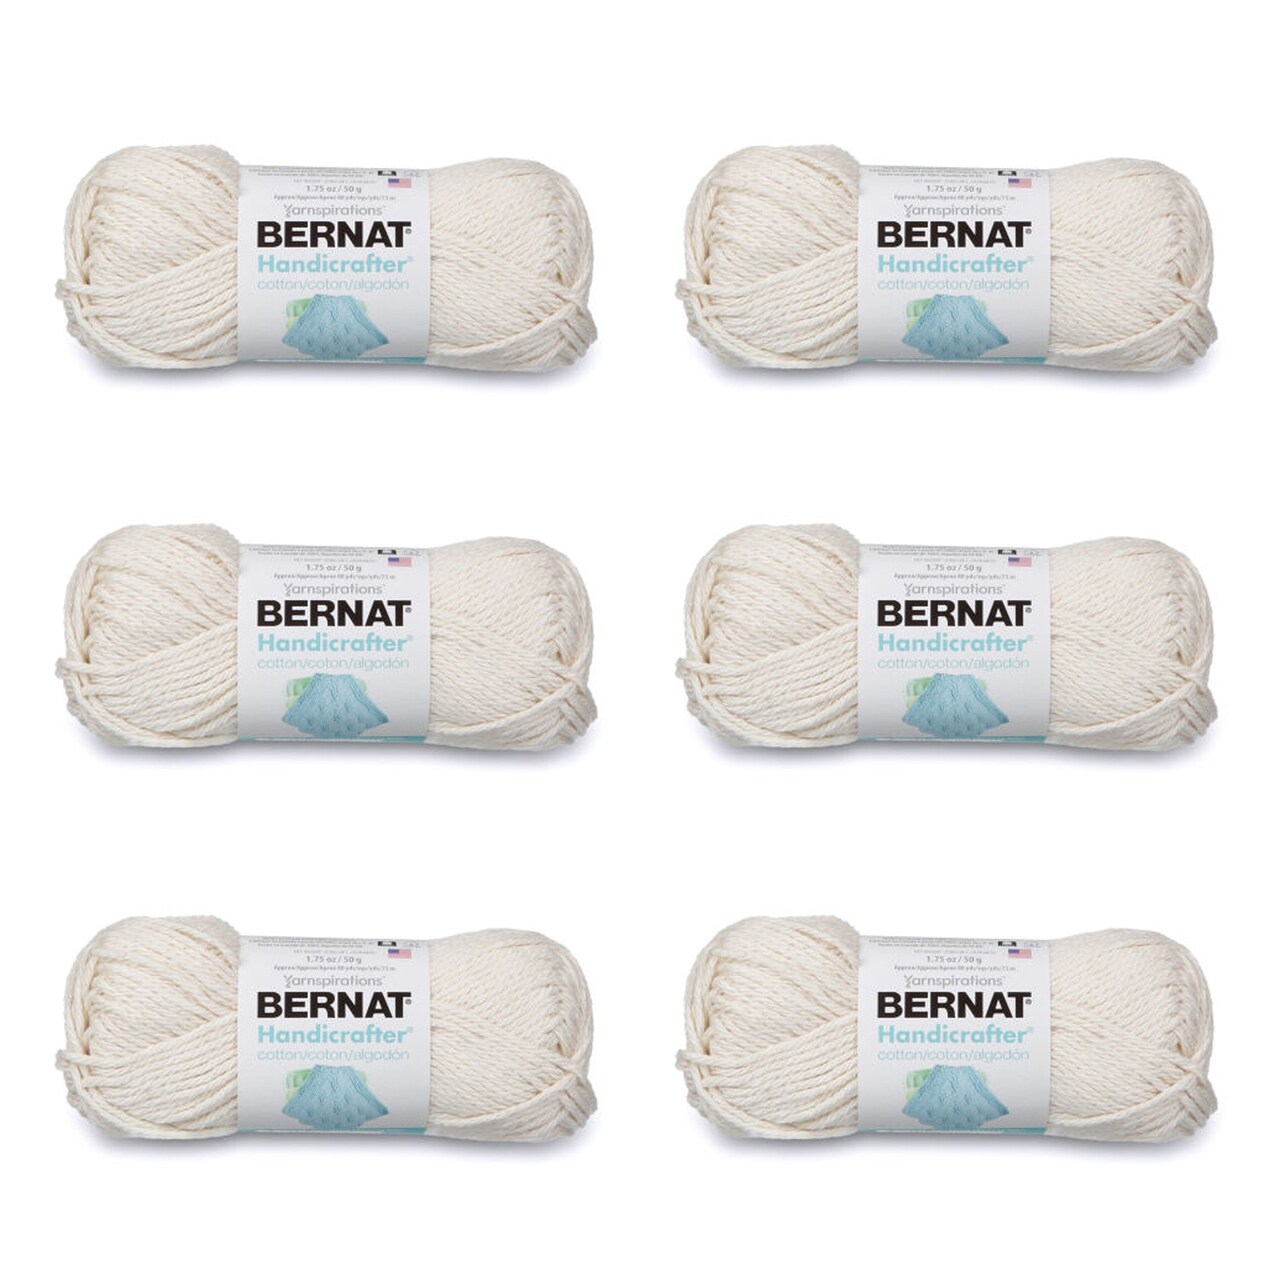 Bernat Handicrafter Cotton Off White Yarn - 6 Pack of 50g/1.75oz